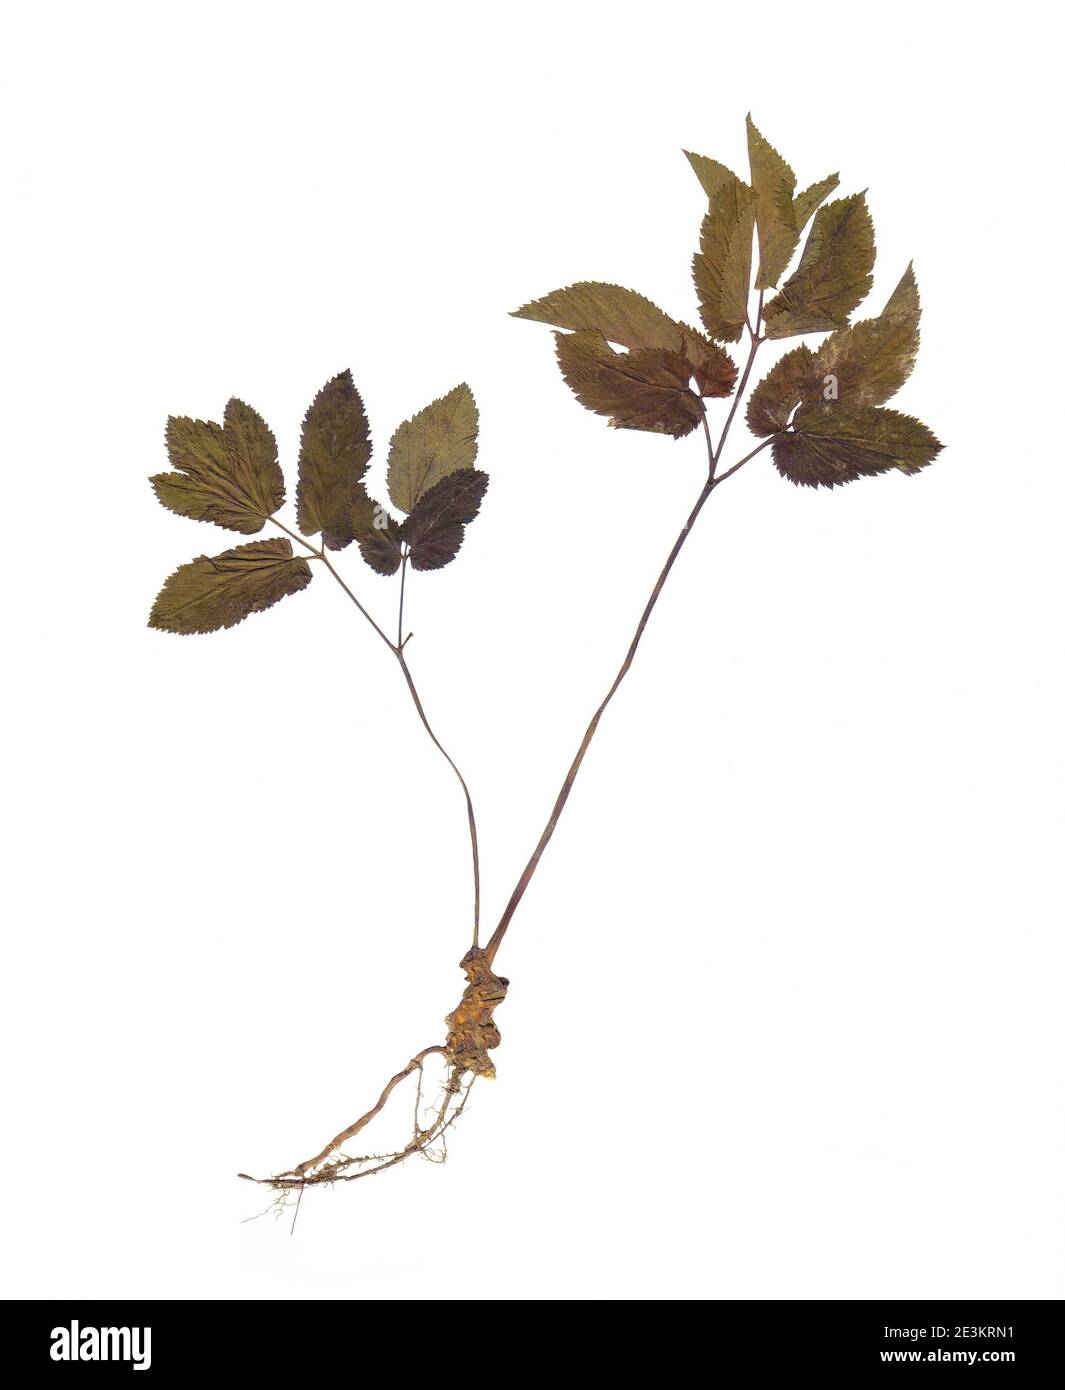 Herbarium with dry pressed plants on white background. Rubus hirtus. Stock Photo